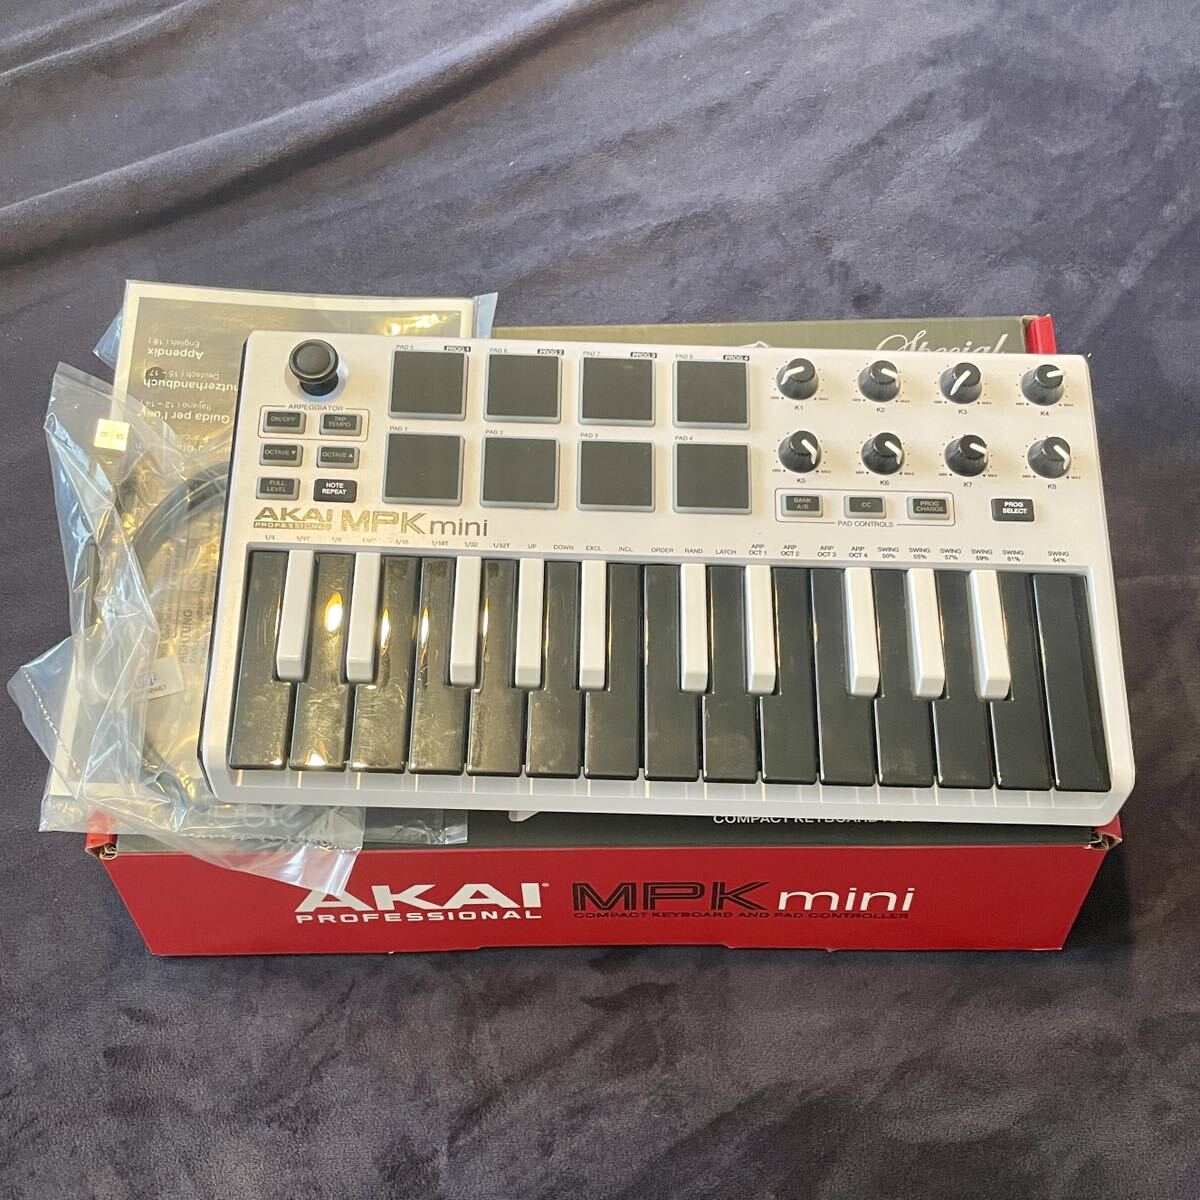 AKAI MPK mini PROFESSIONAL 25 keyboard MIDI keyboard controller used operation goods instructions * box attached free shipping 